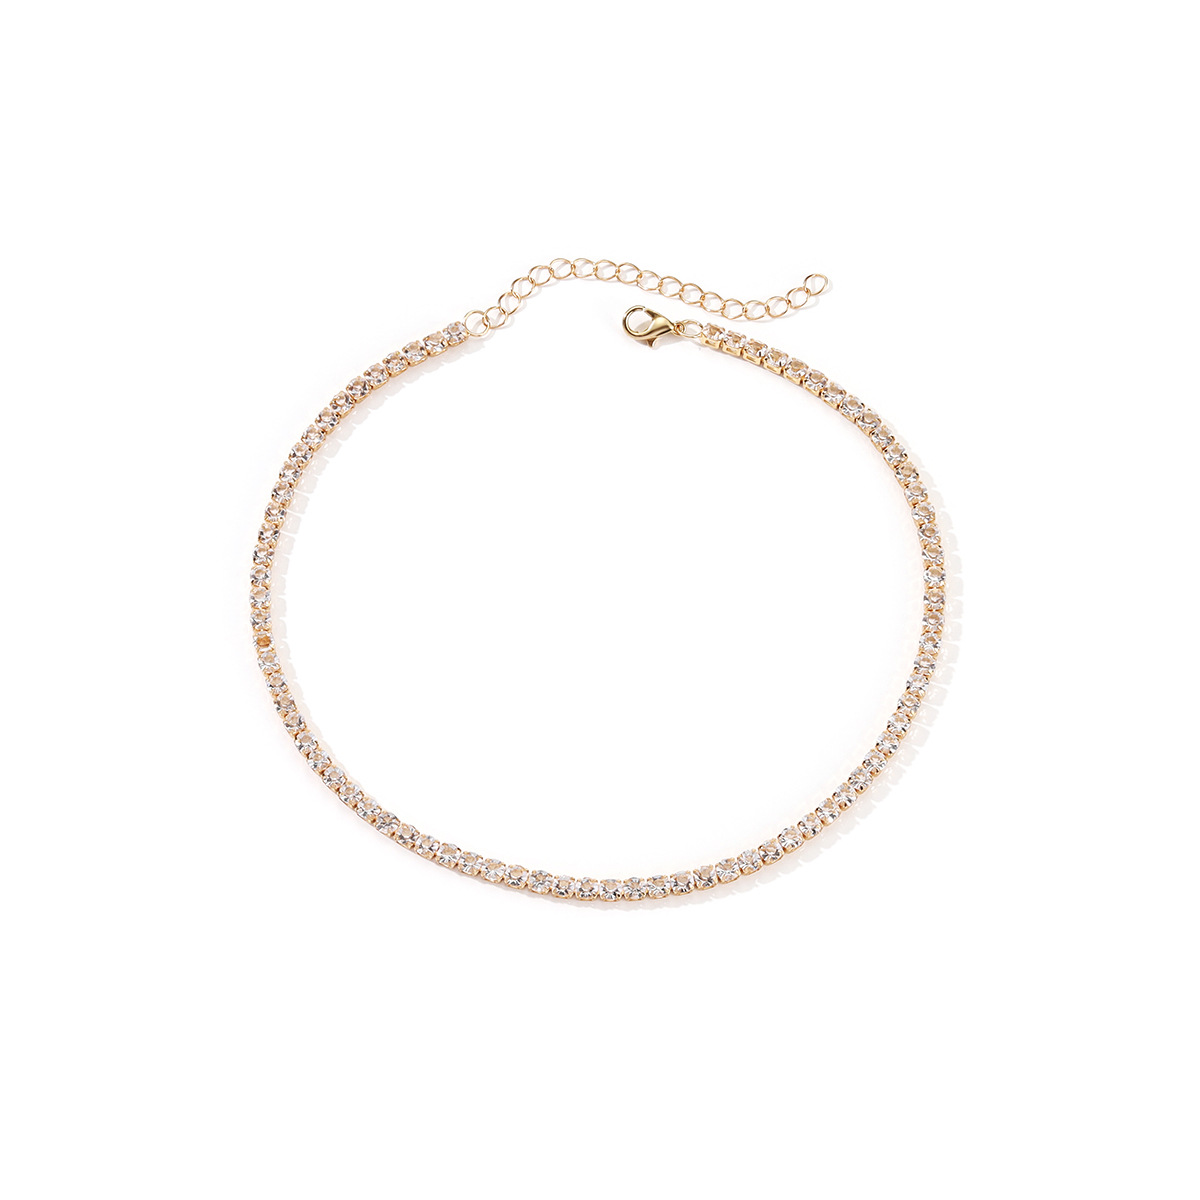 3:Transparent gold necklace